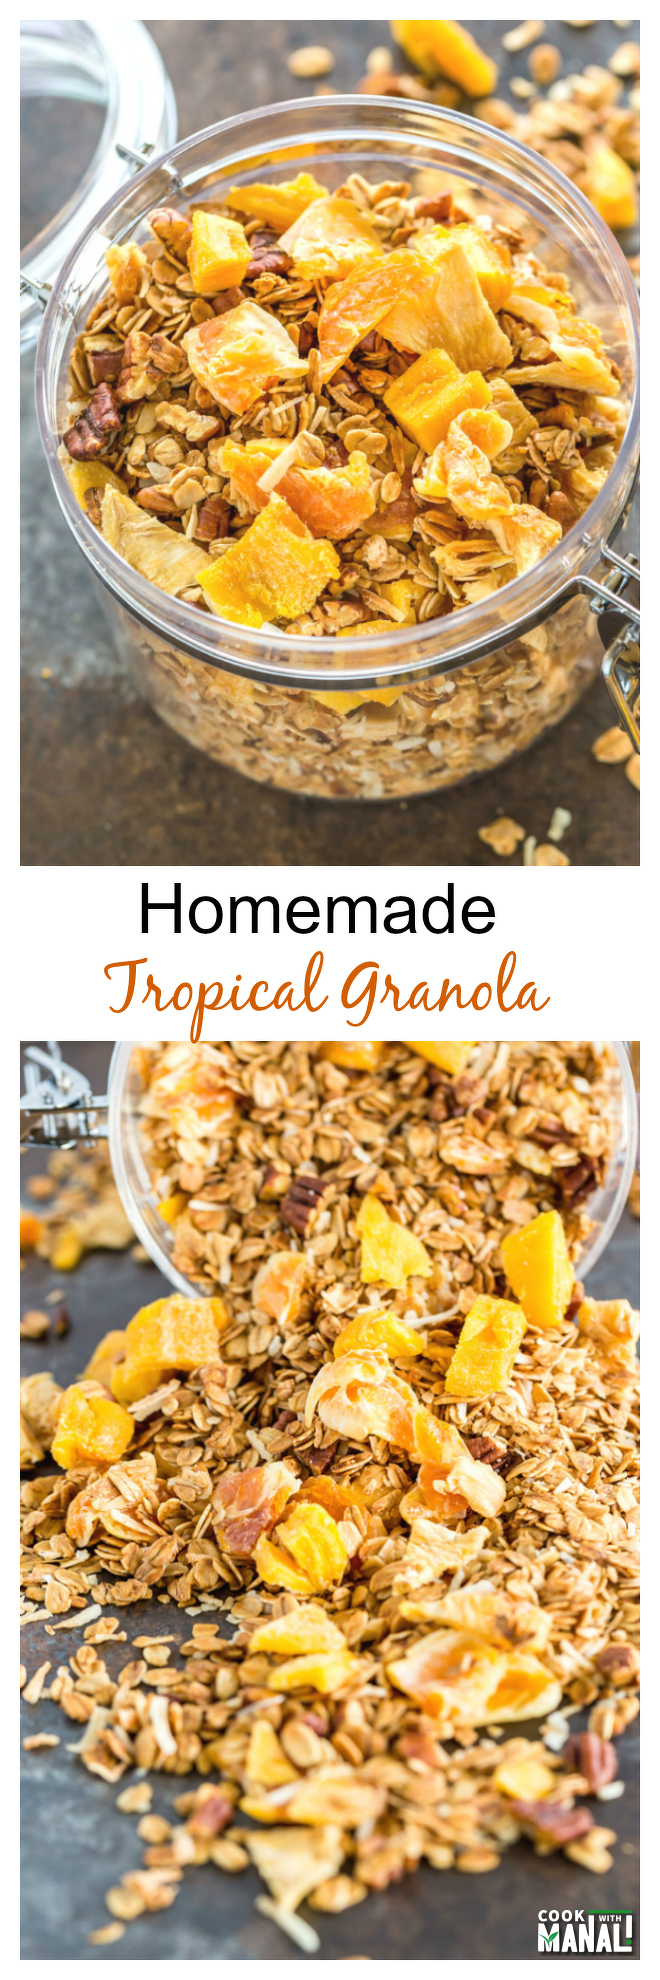 Homemade-Tropical-Granola-Collage